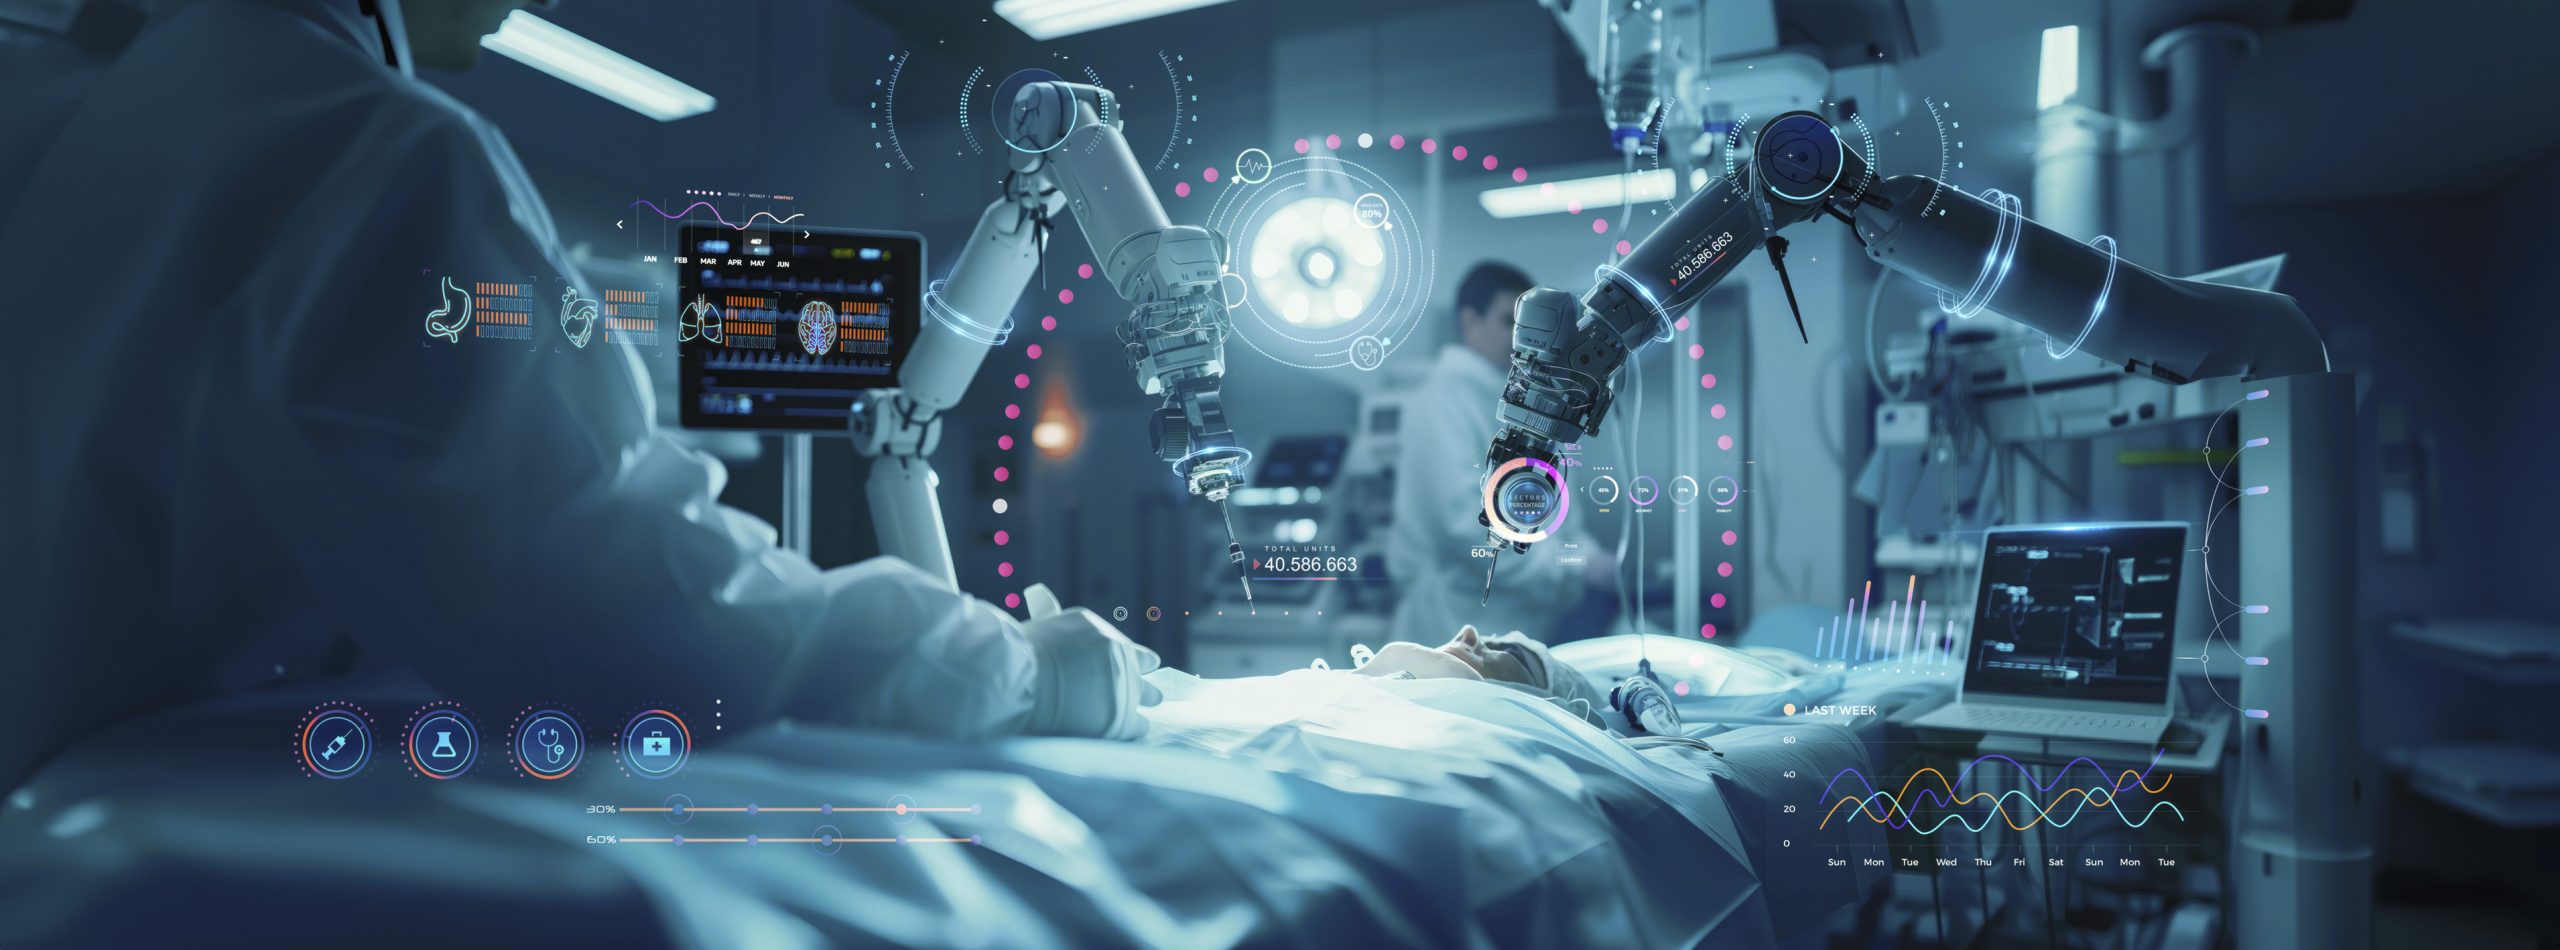 futuristic robotic surgery